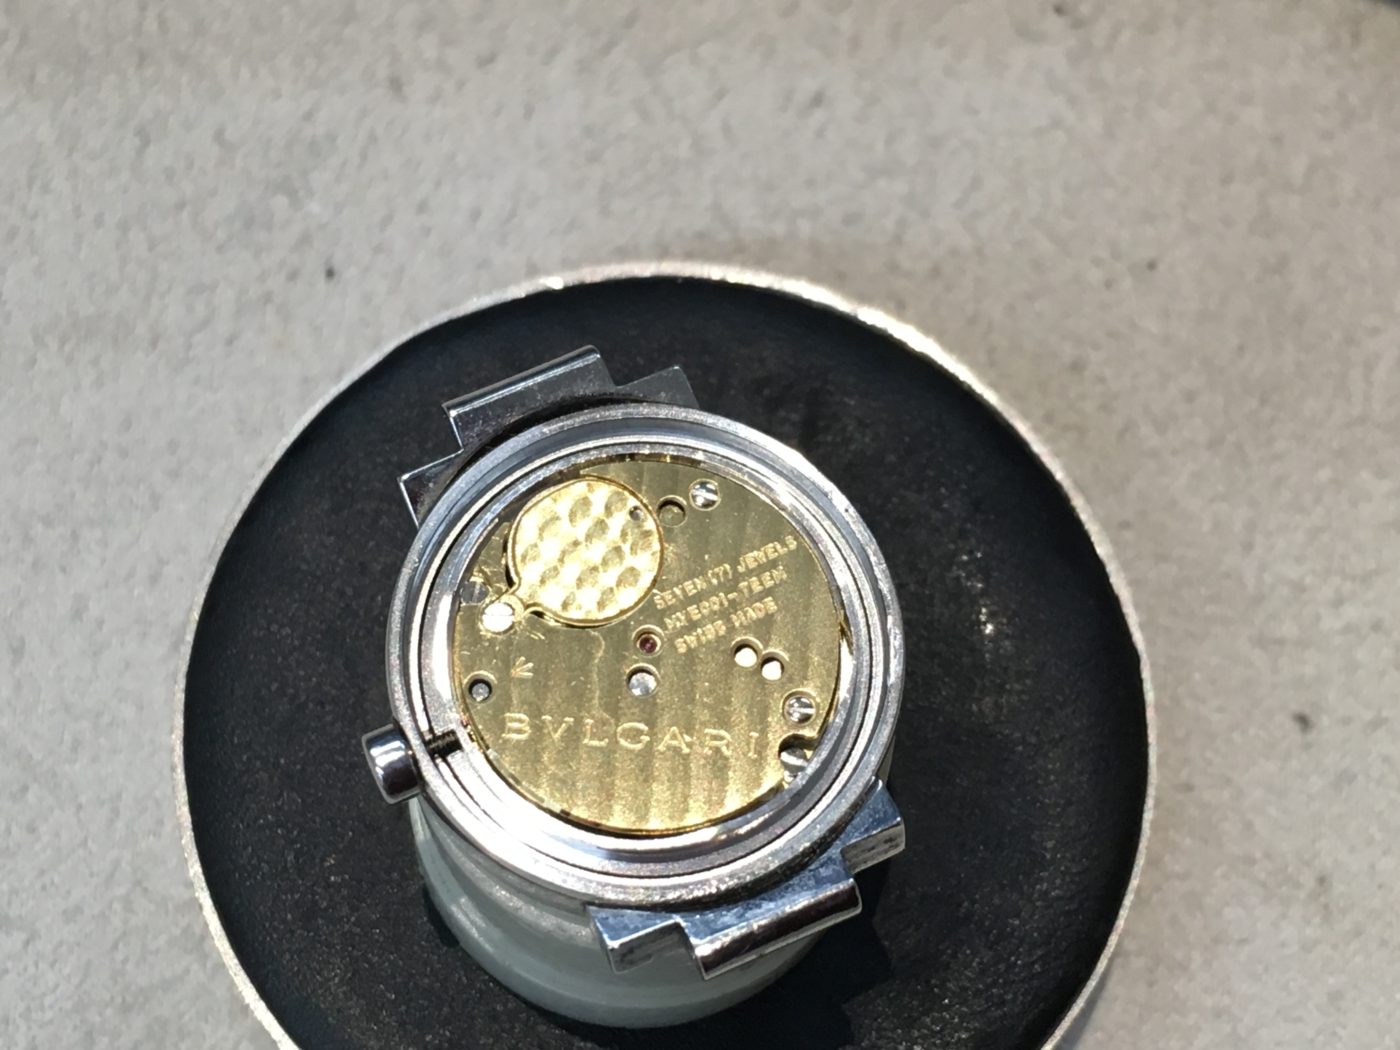 BVLGARIの腕時計 電池交換 金額 山梨県